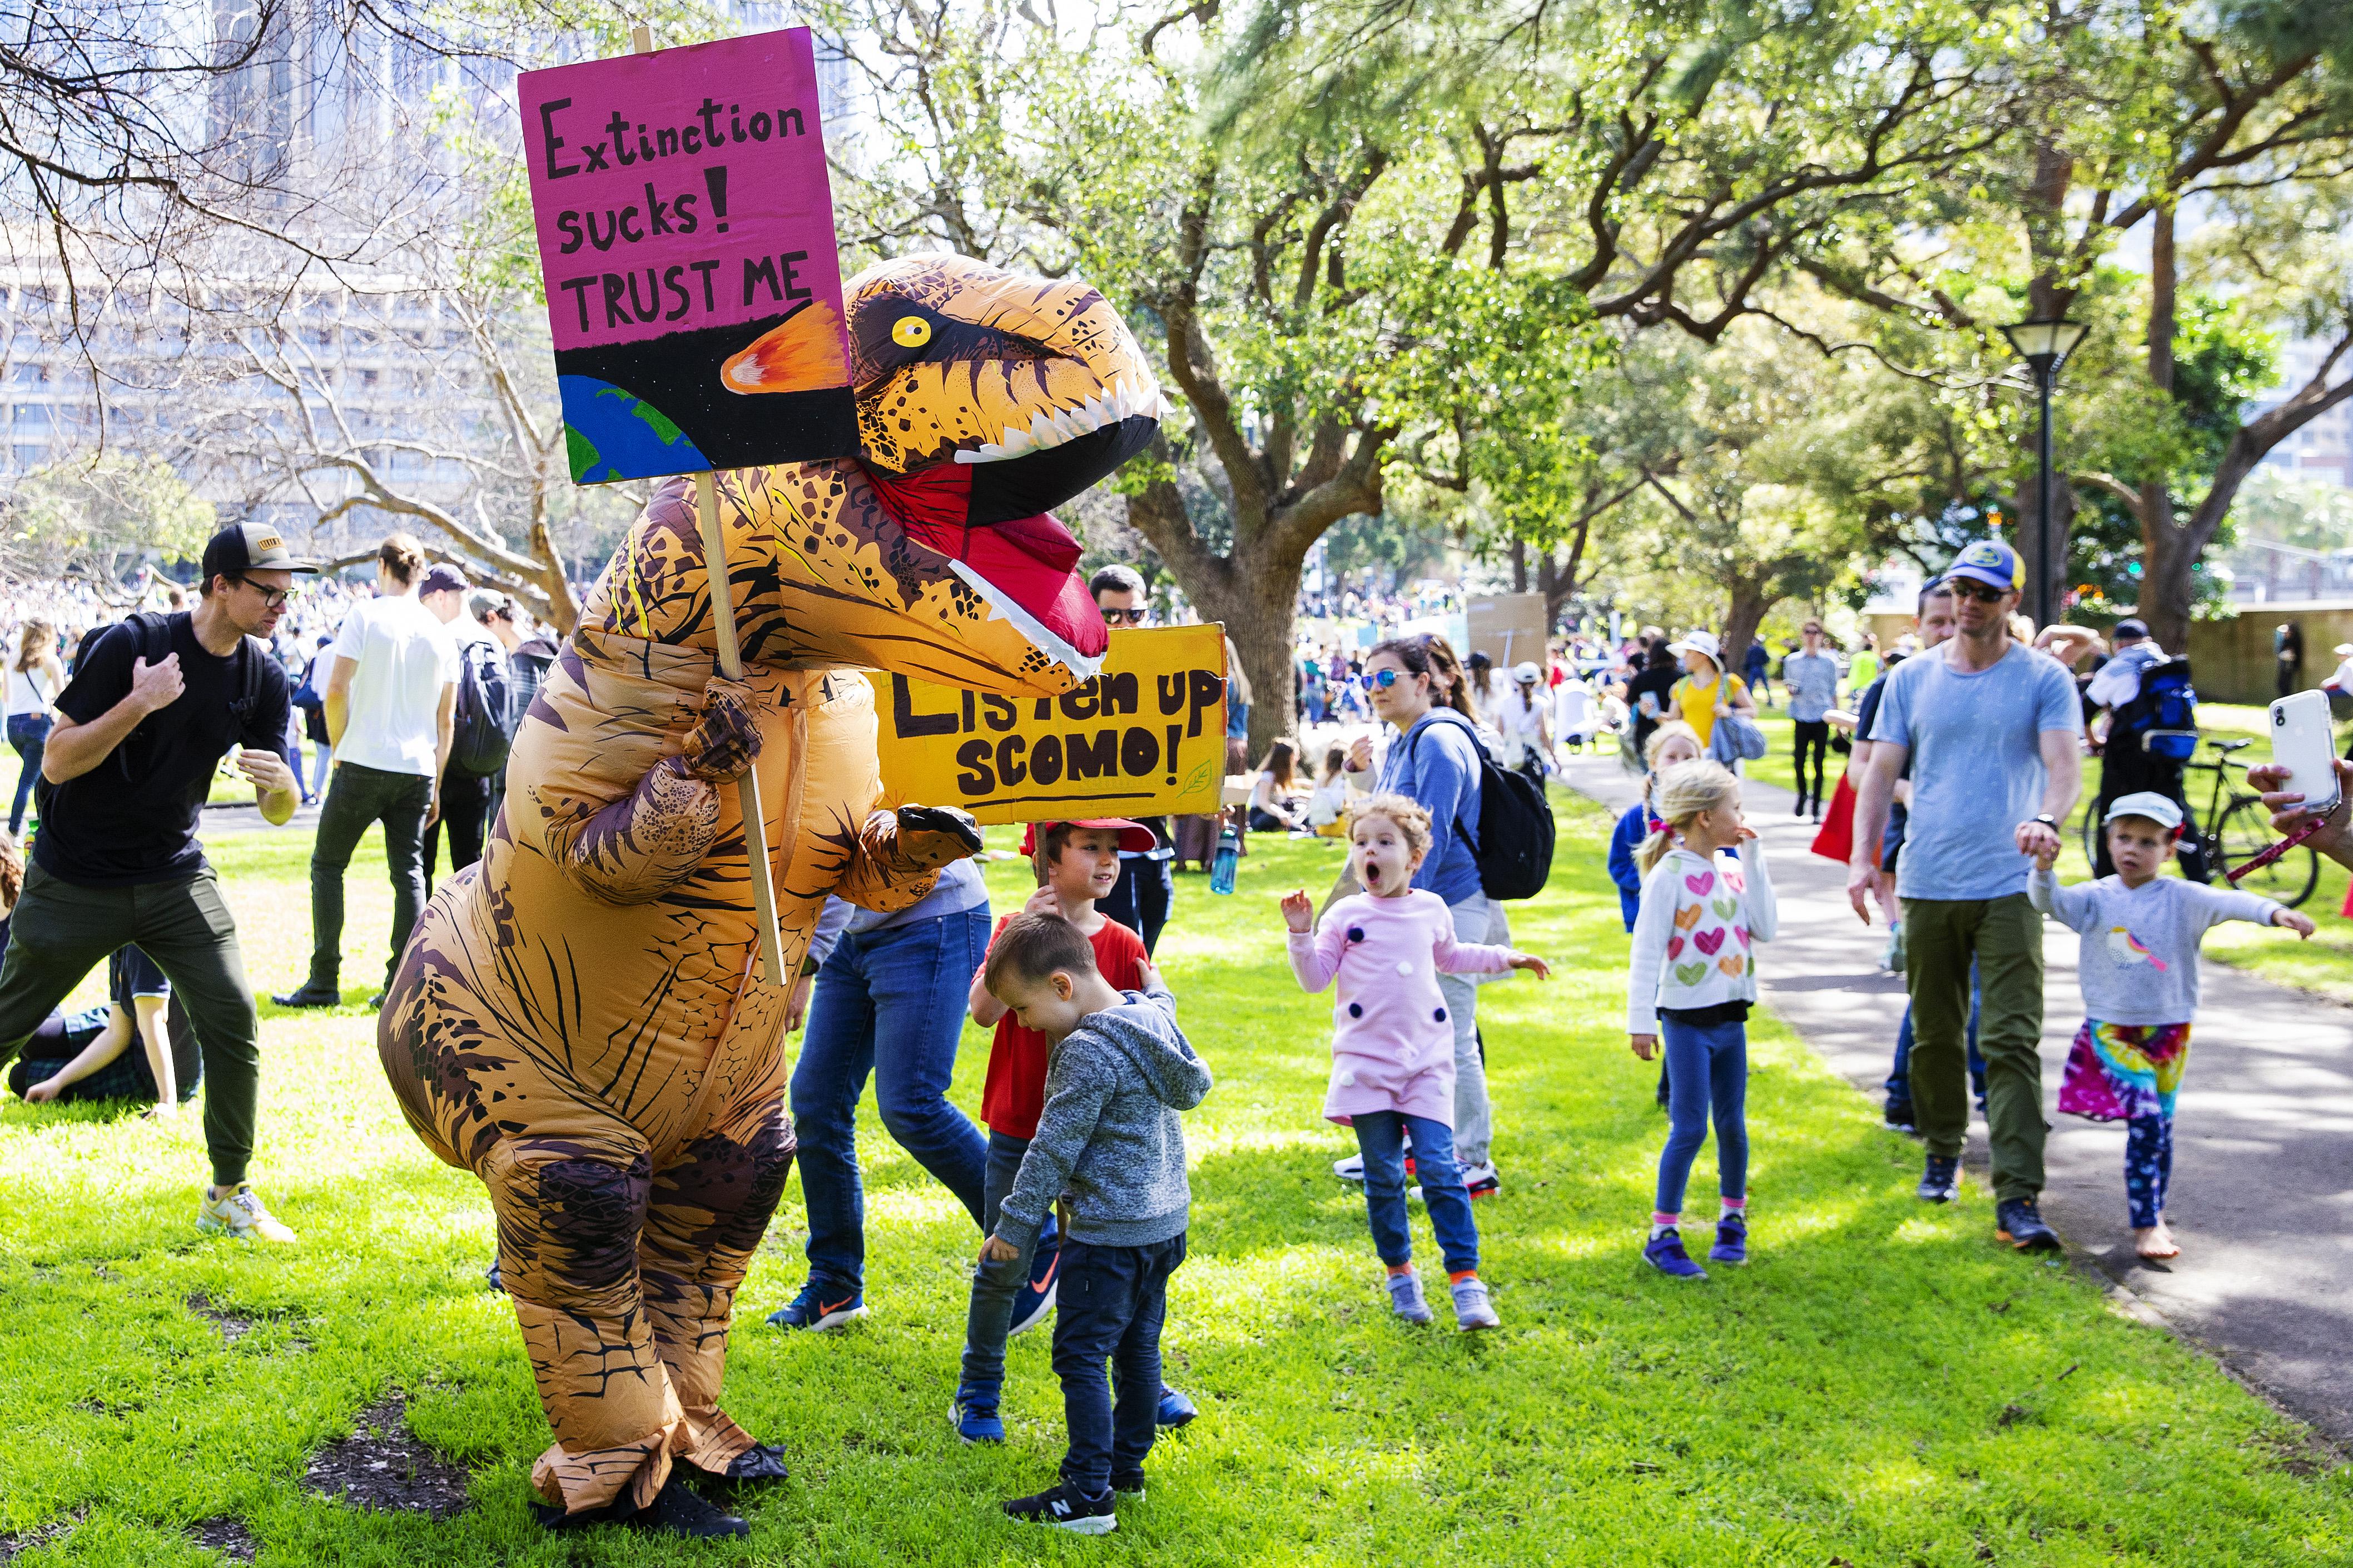 Children react as a man dressed as a dinosaur  carries a banner that says "extinciton sucks! trust me"